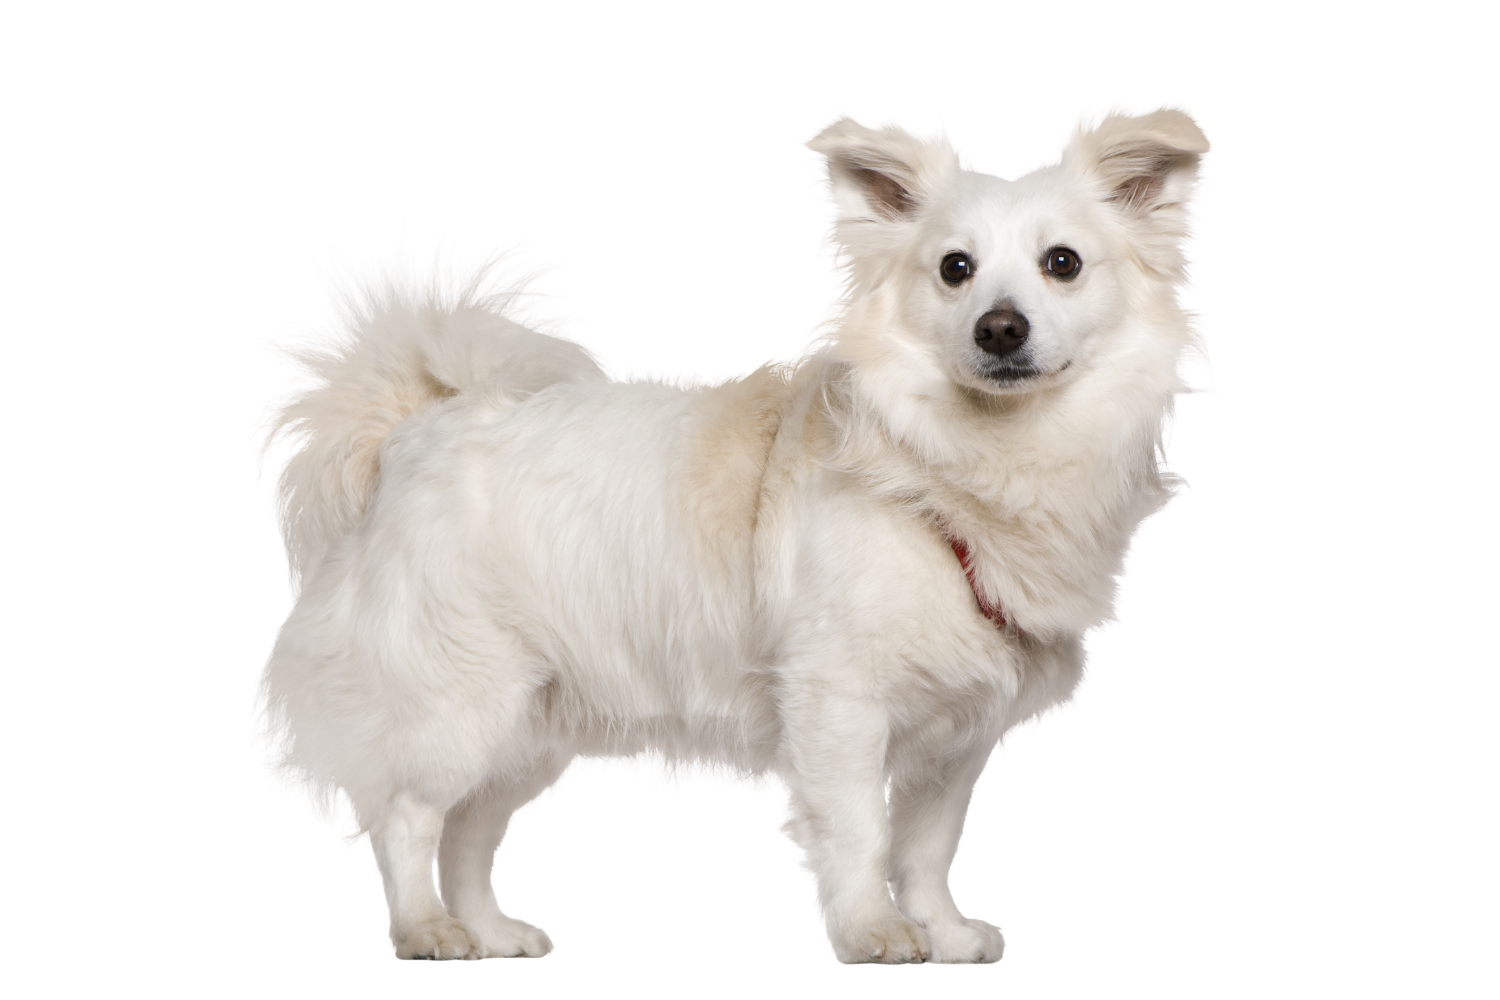 A White Furry Dog